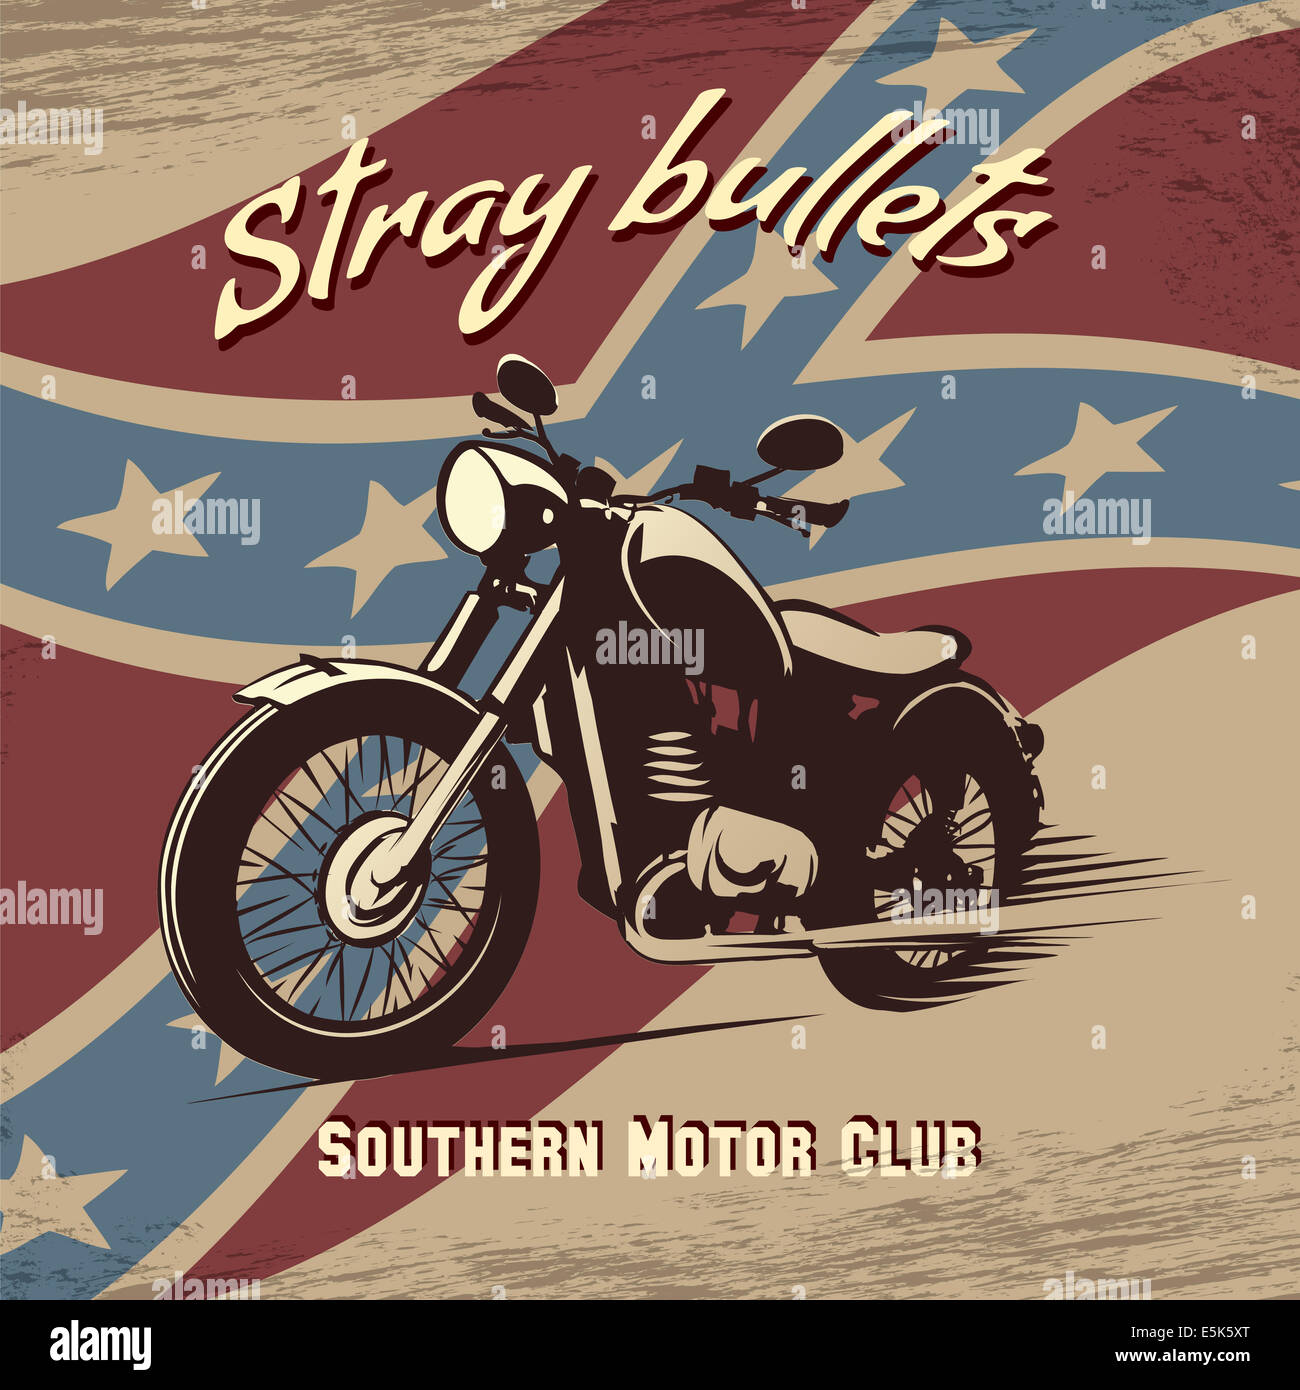 Retro motorcycle club poster Stock Photo